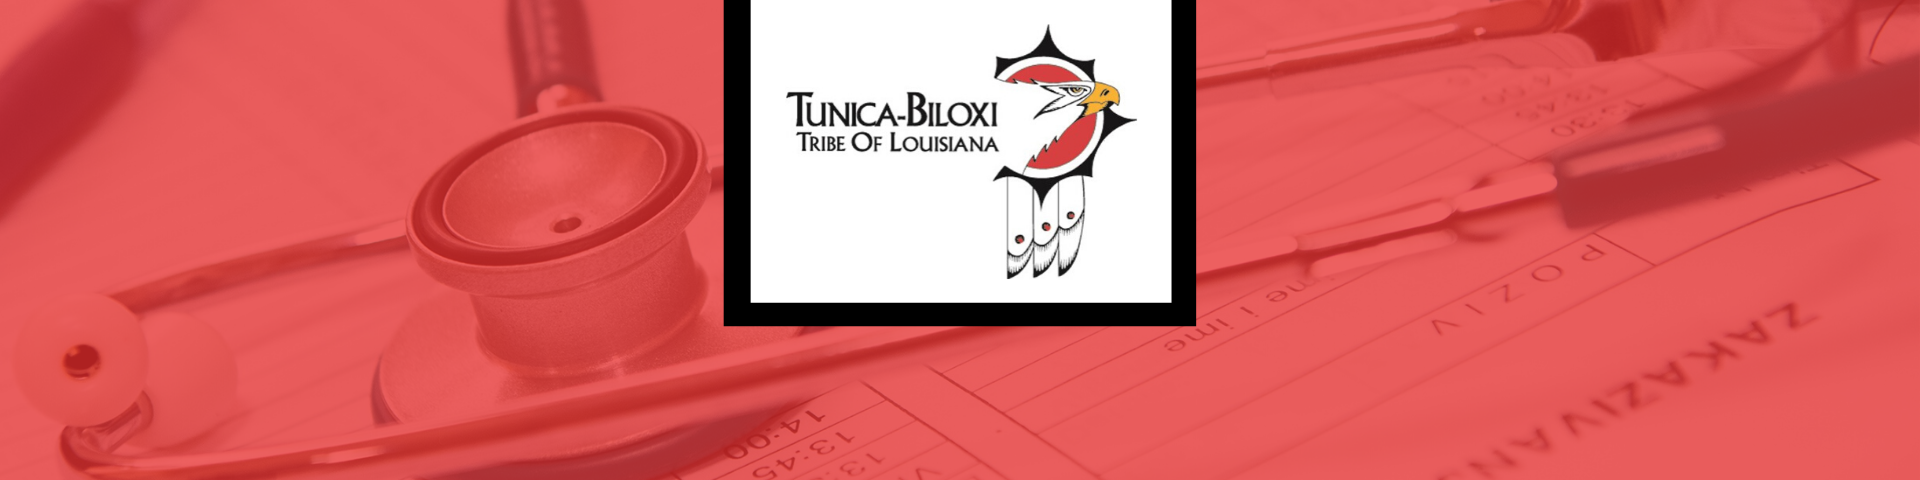 Tunica-Biloxi: COVID-19 Tribal Member Assessment